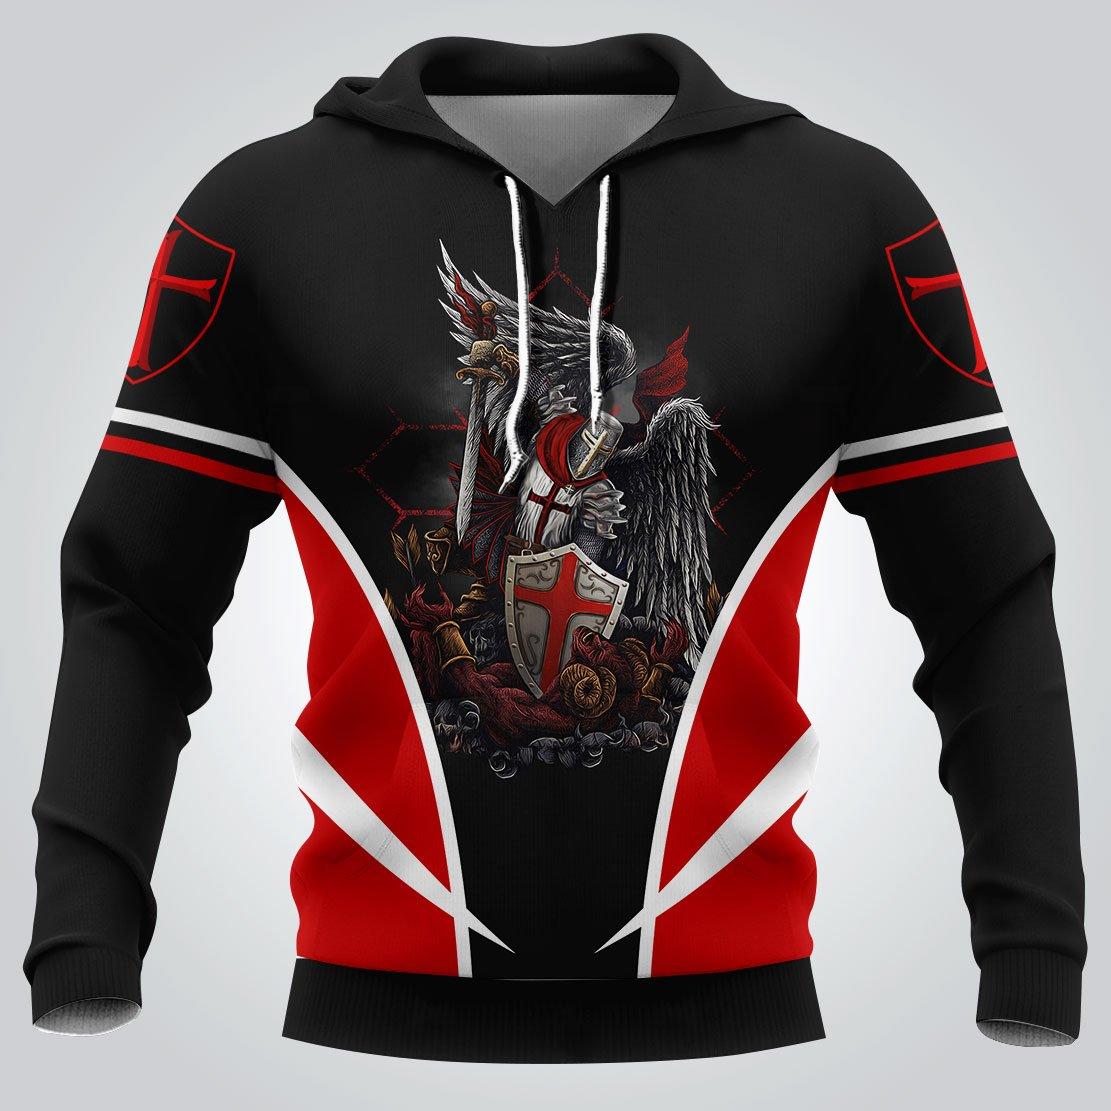 Knights templar 3d full printing hoodie - maria